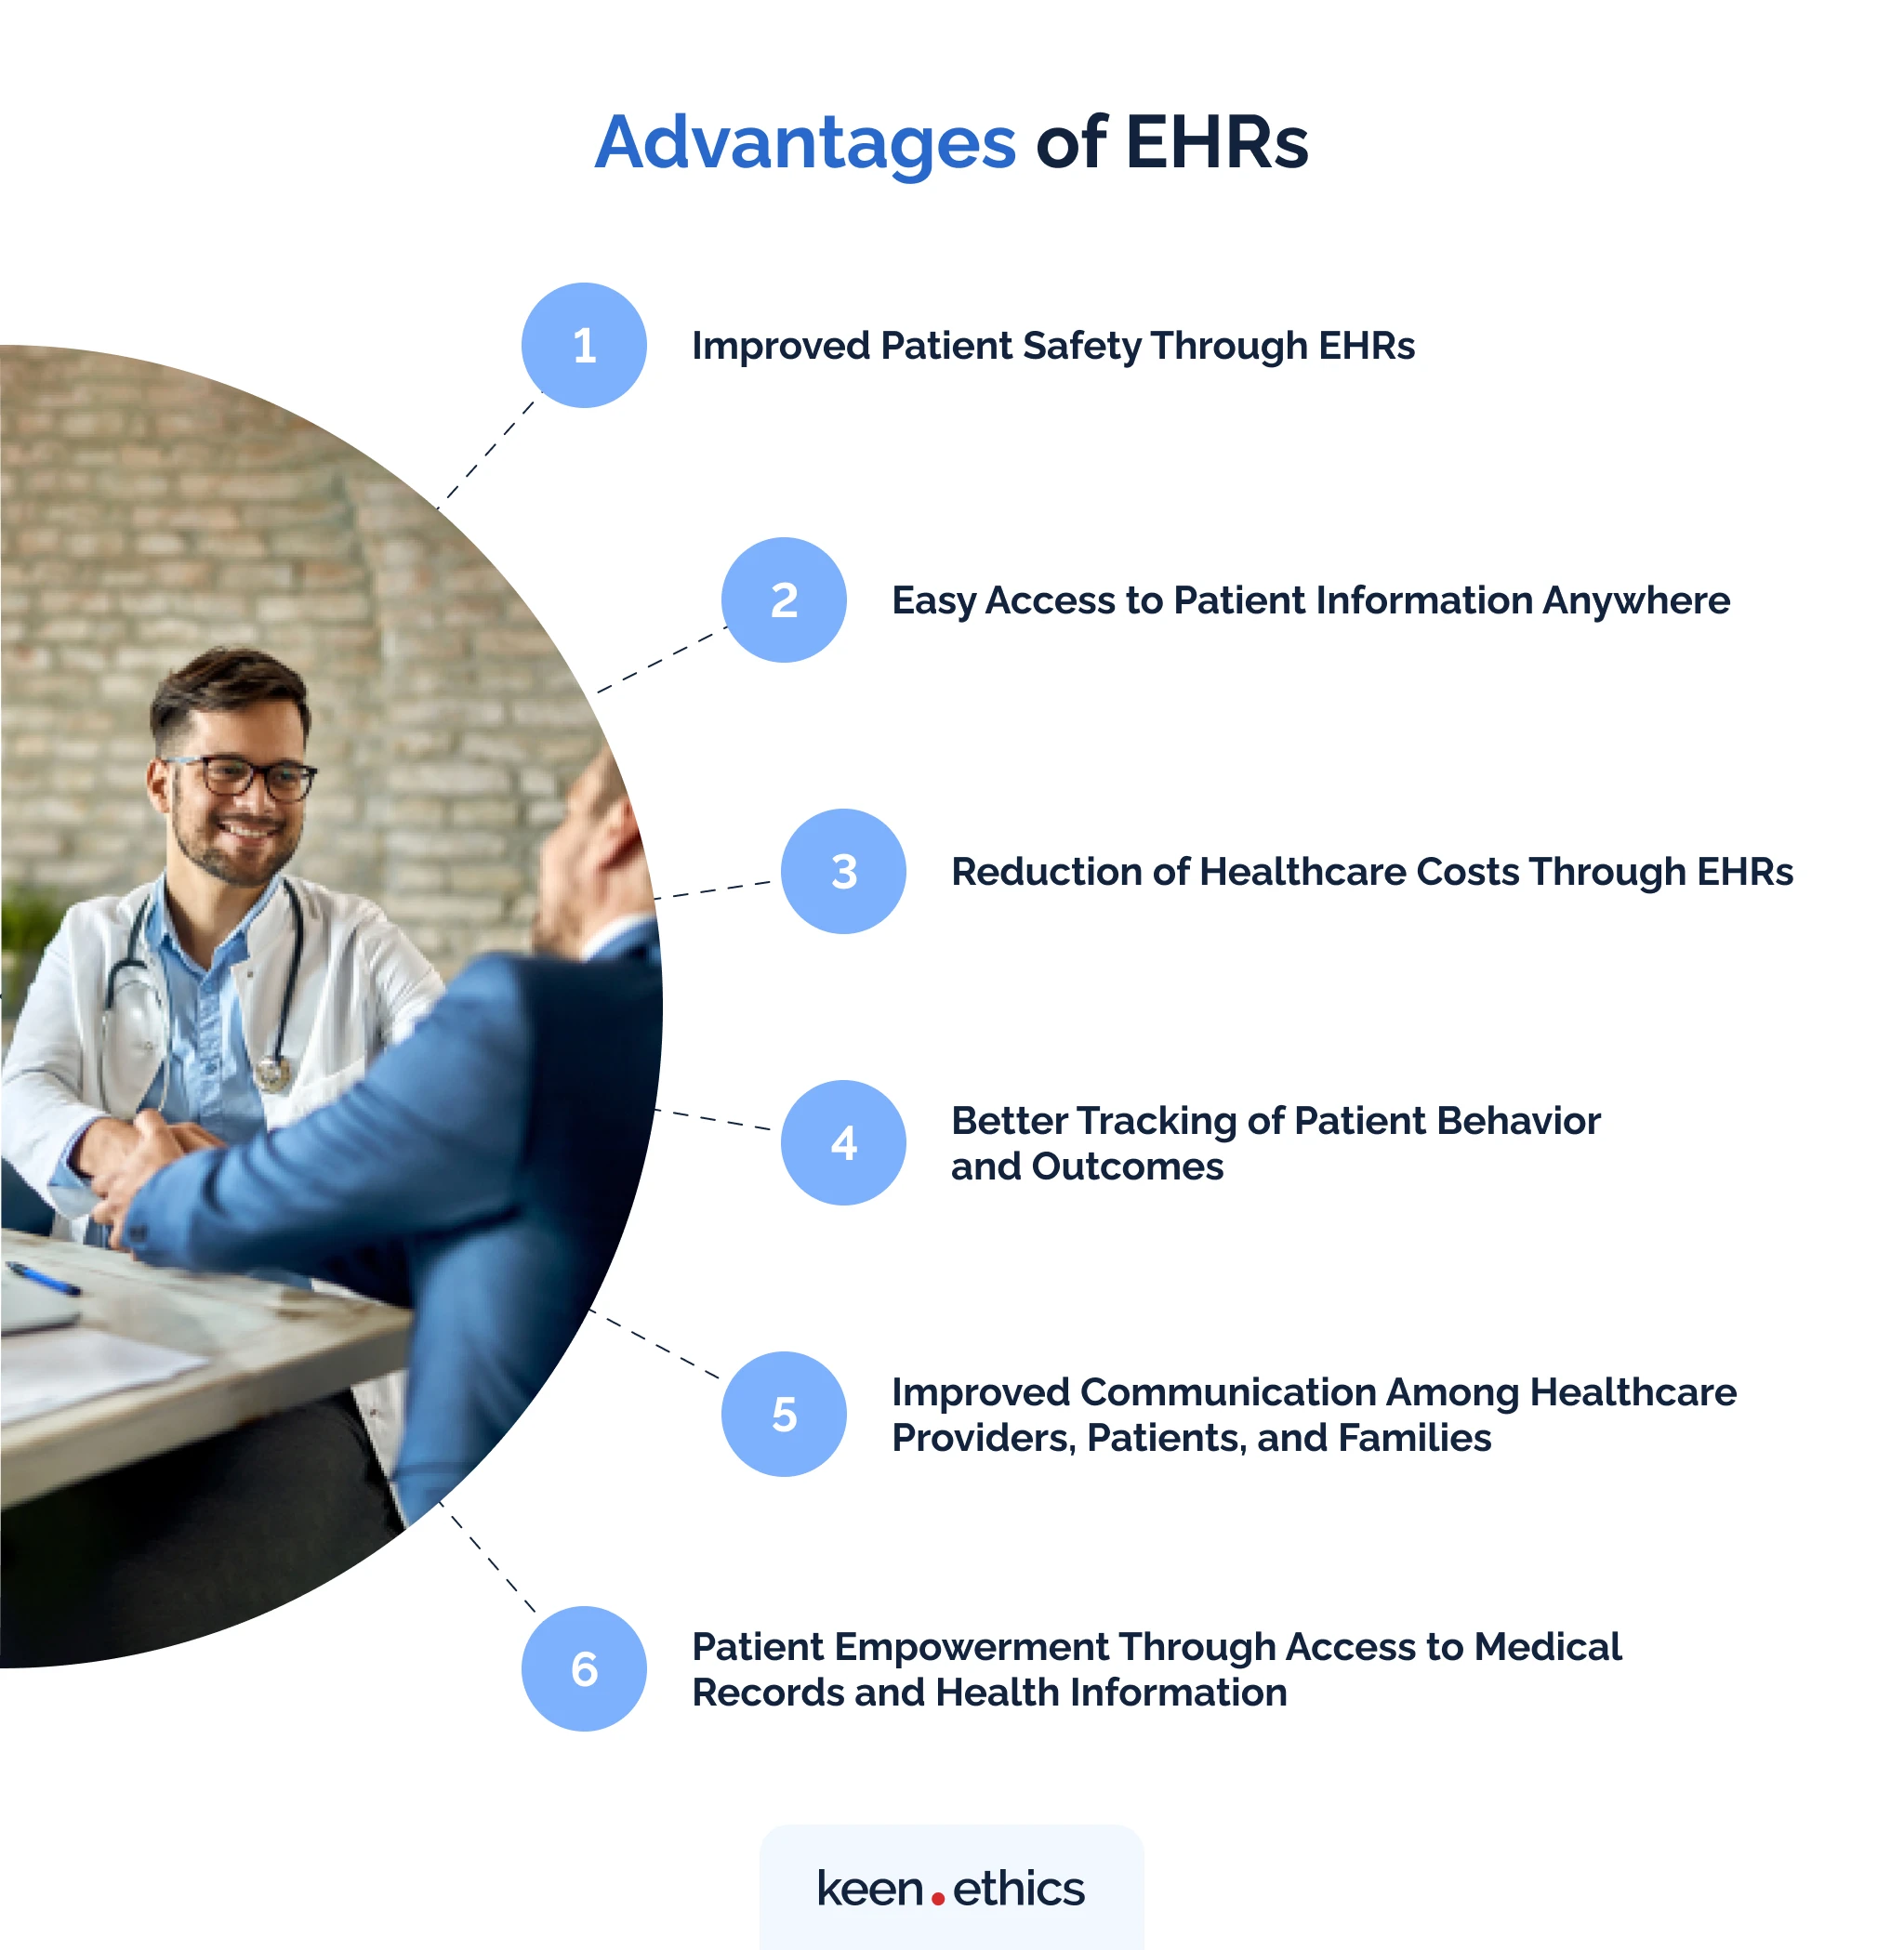 Advantages of EHRs